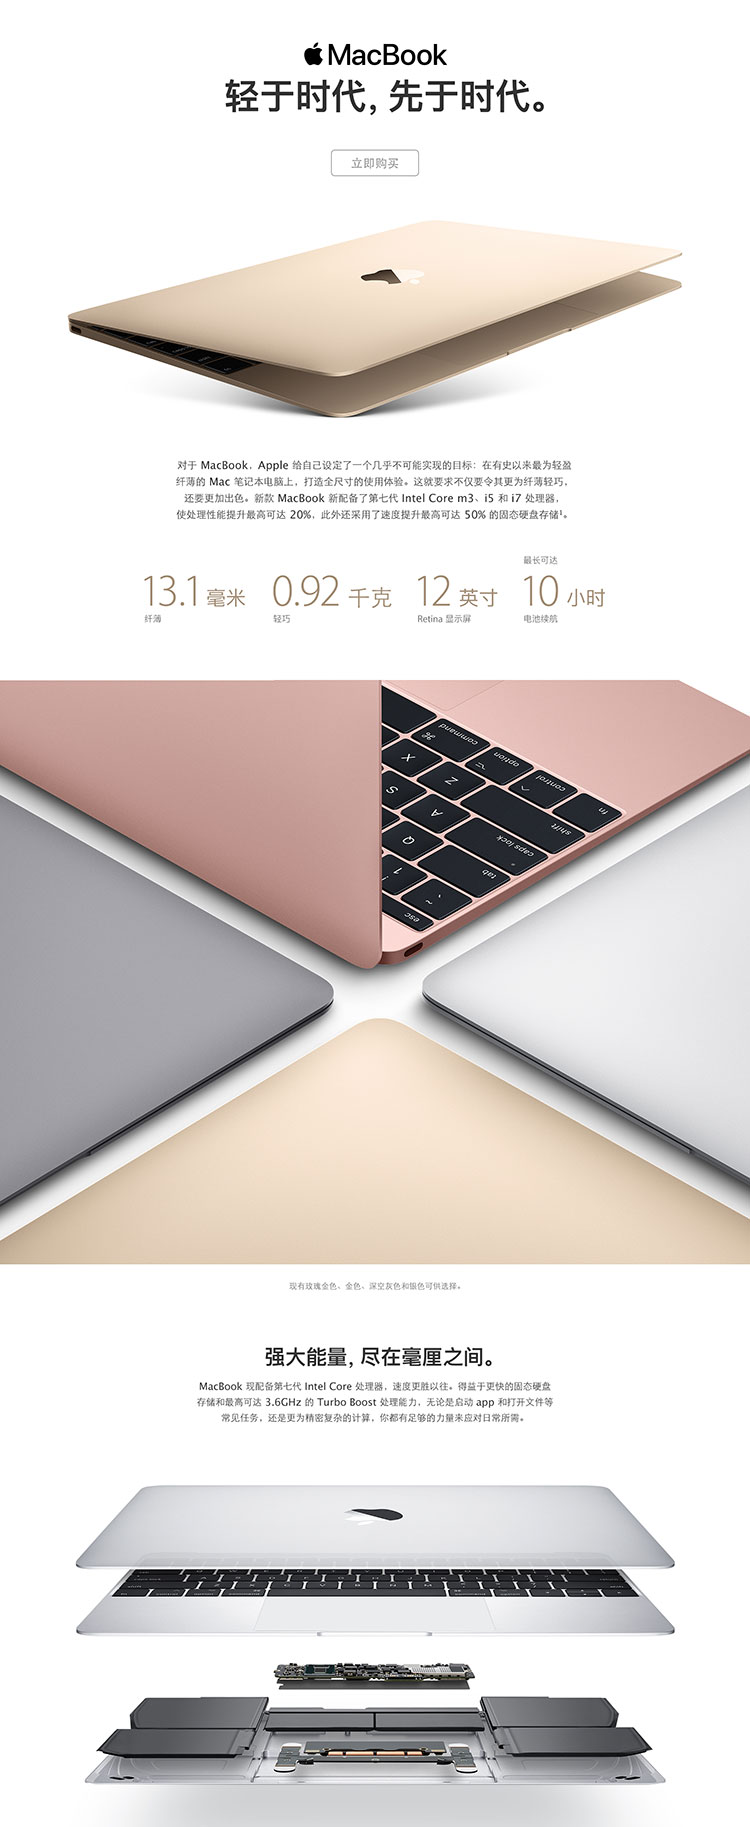 Apple MacBook 12英寸Core M3 /8GB/256GB 笔记本电脑 深空灰色（2017款 MNYF2CH/A）